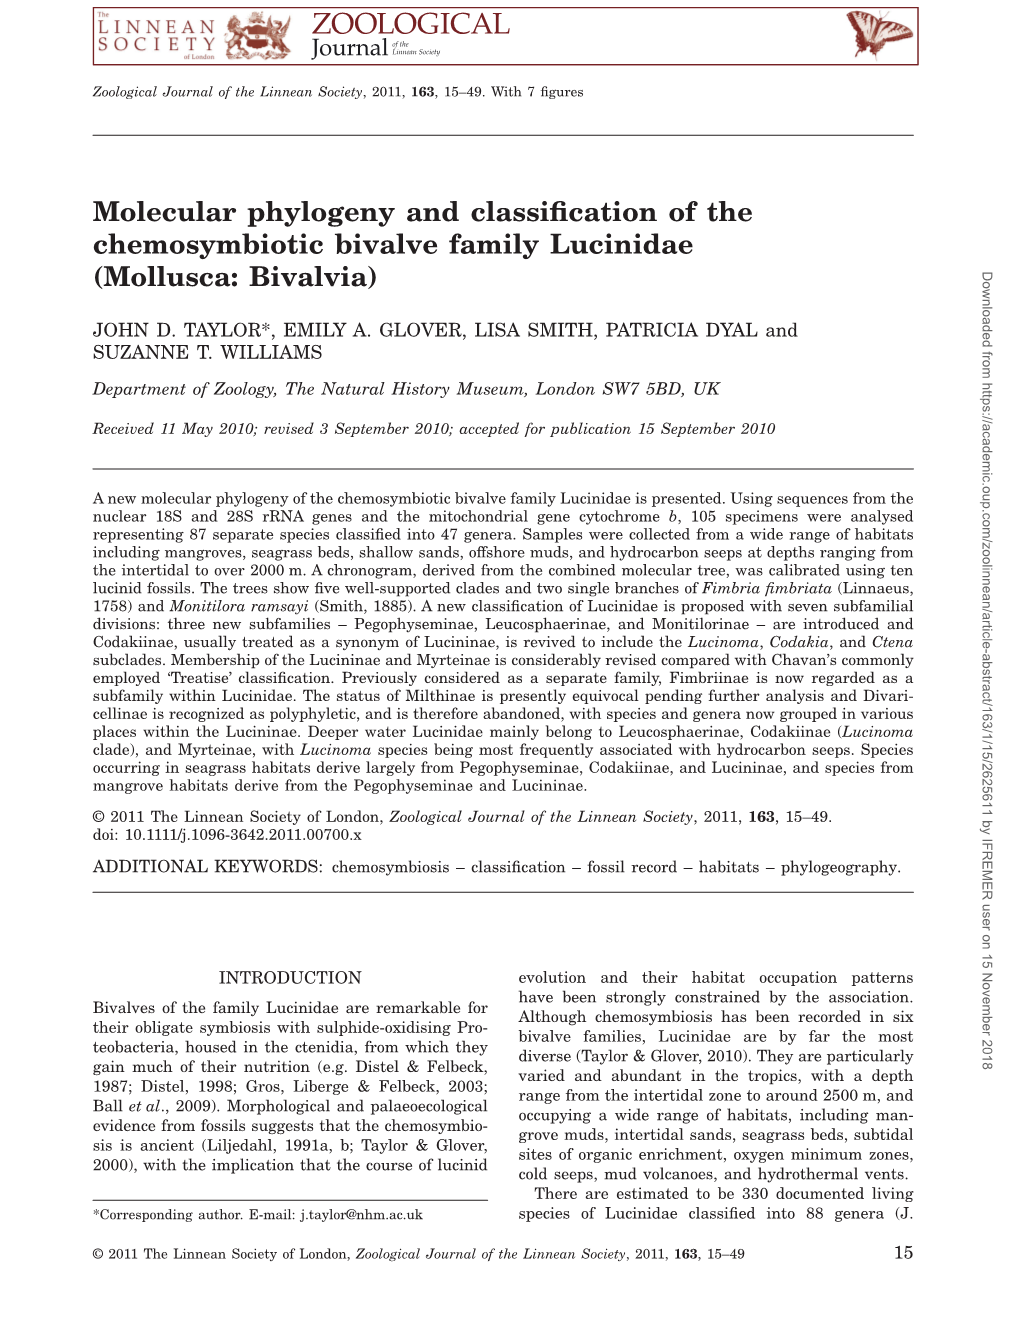 Molecular Phylogeny and Classification of the Chemosymbiotic Bivalve Family Lucinidae (Mollusca: Bivalvia)Zoj 700 15..49